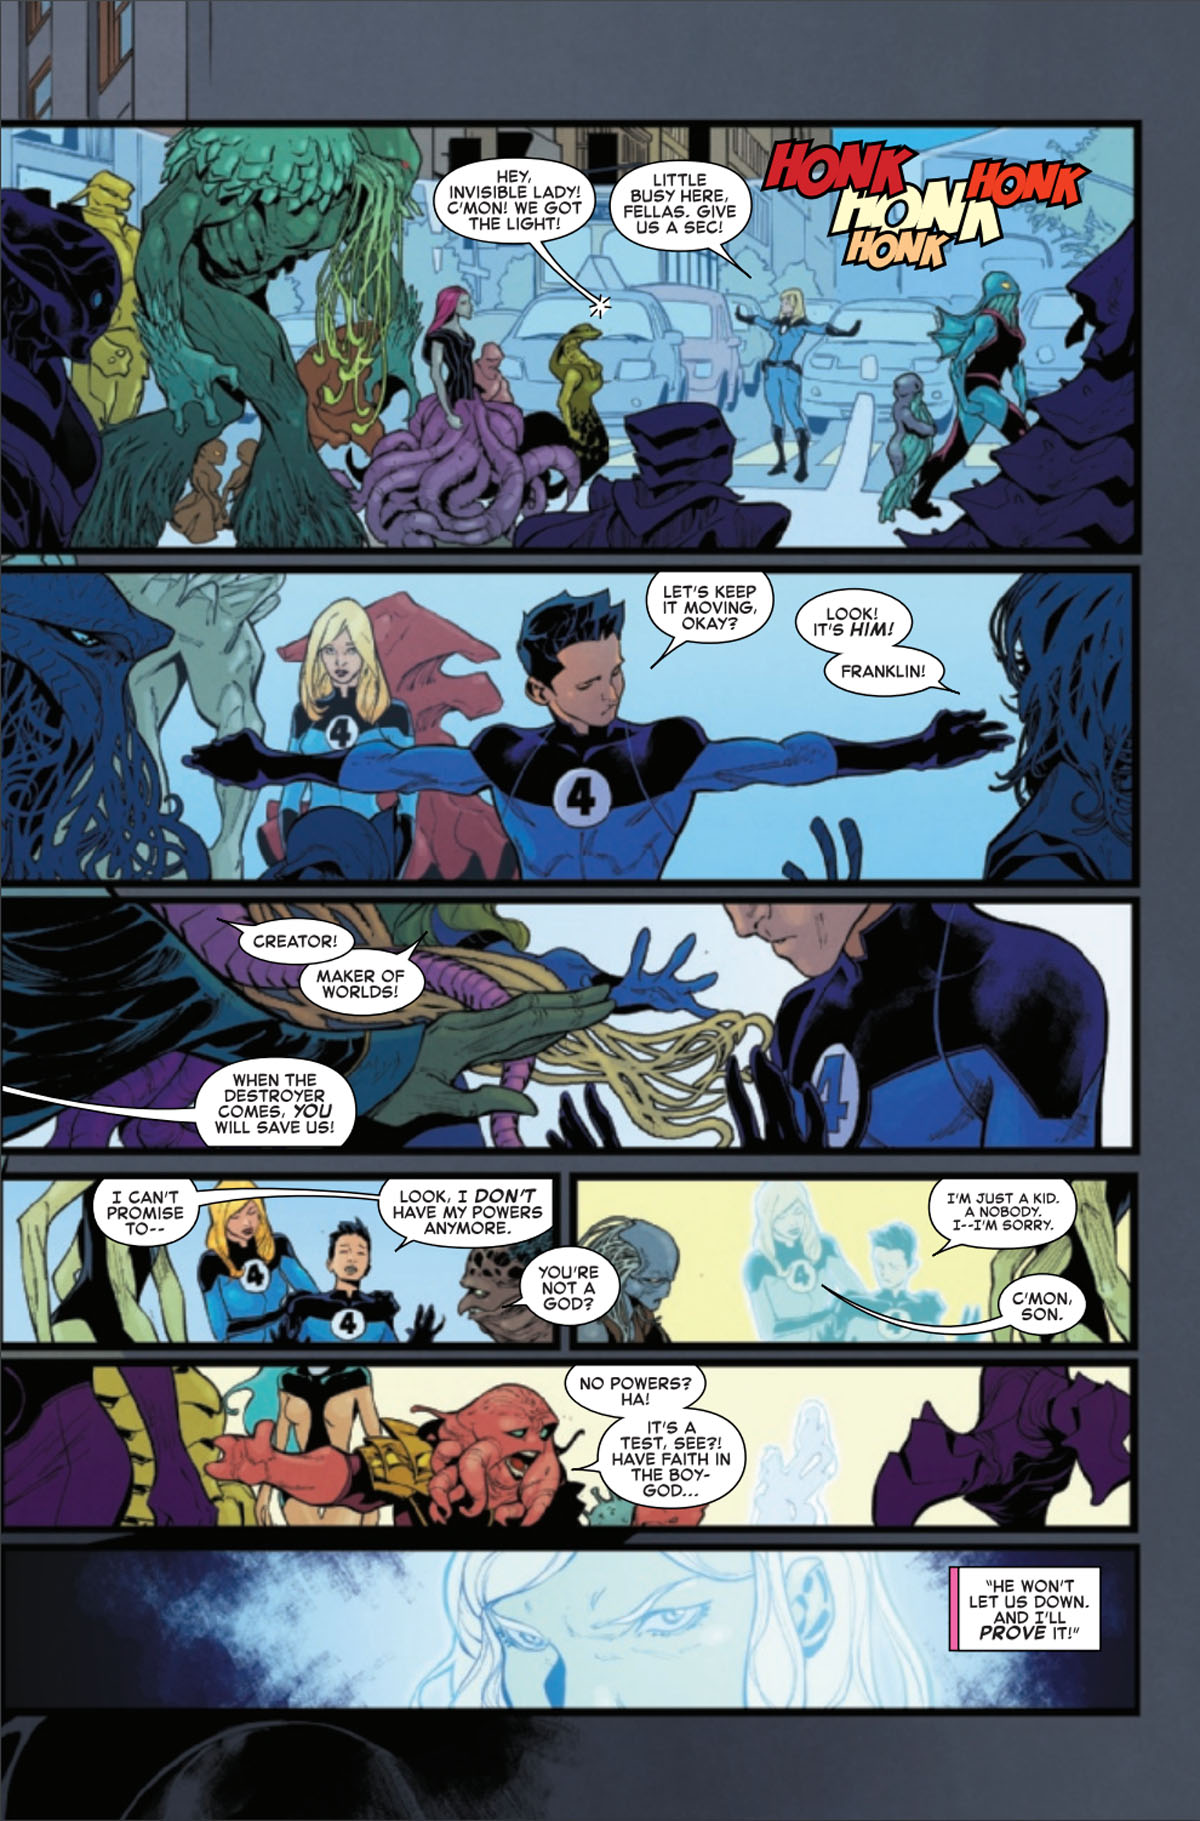 Fantastic Four #27 page 2